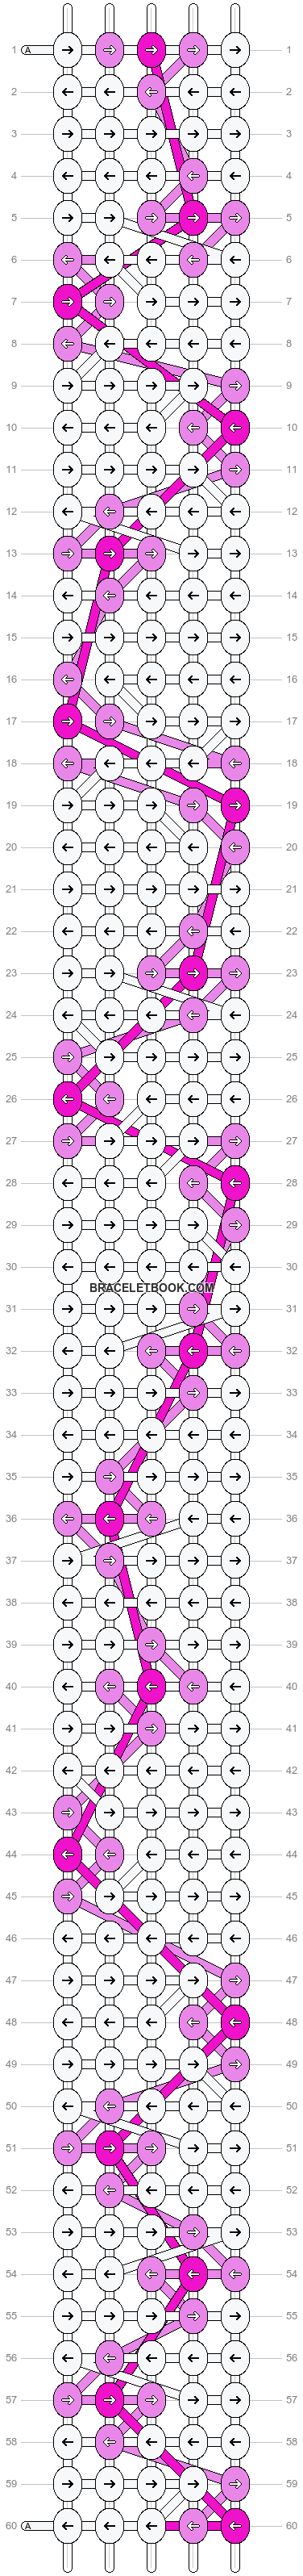 Alpha pattern #38852 variation #45041 pattern